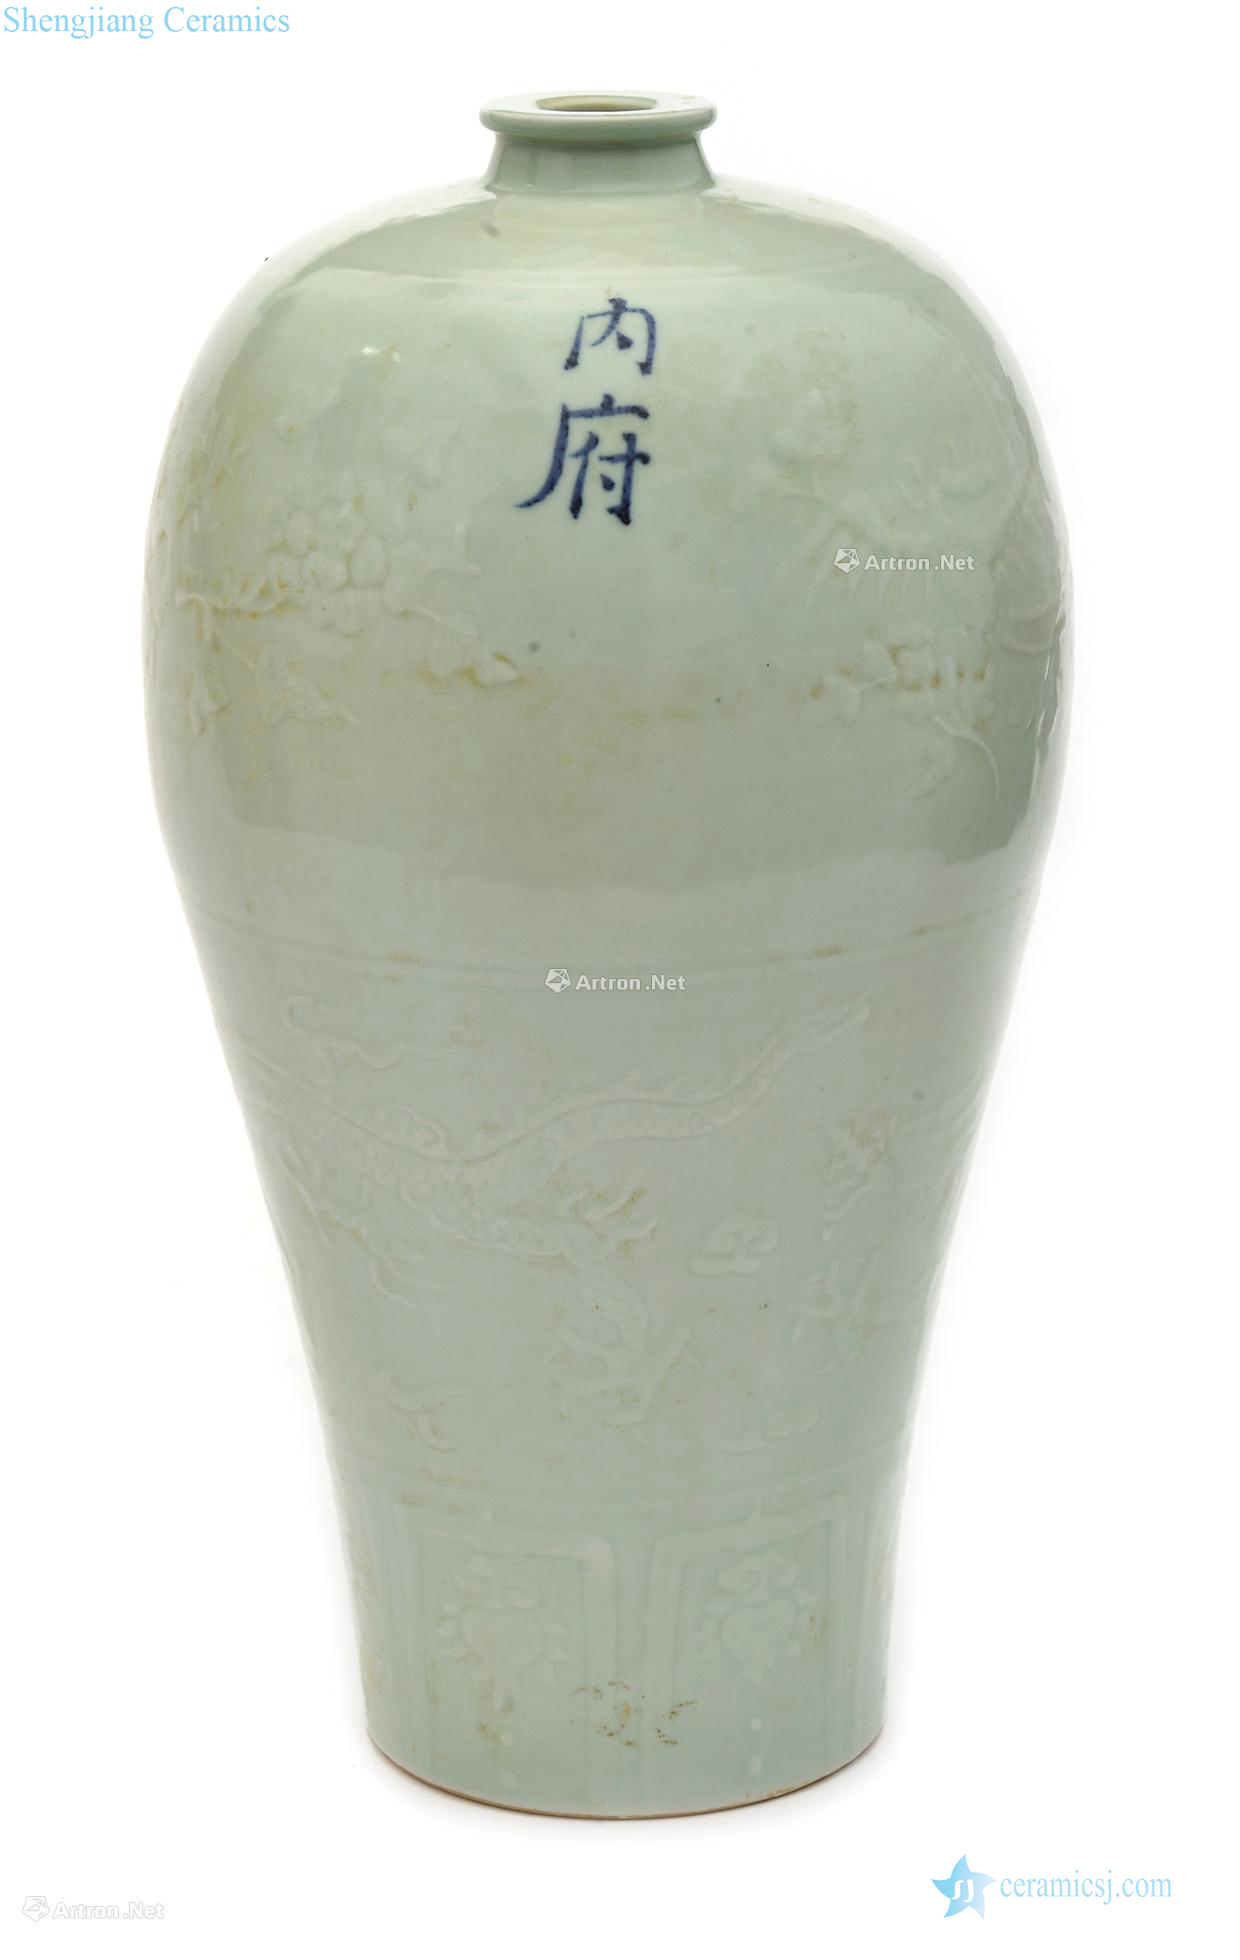 Plastic coated dark yuan dynasty carved dragons and phoenixes grain egg white glaze bottle